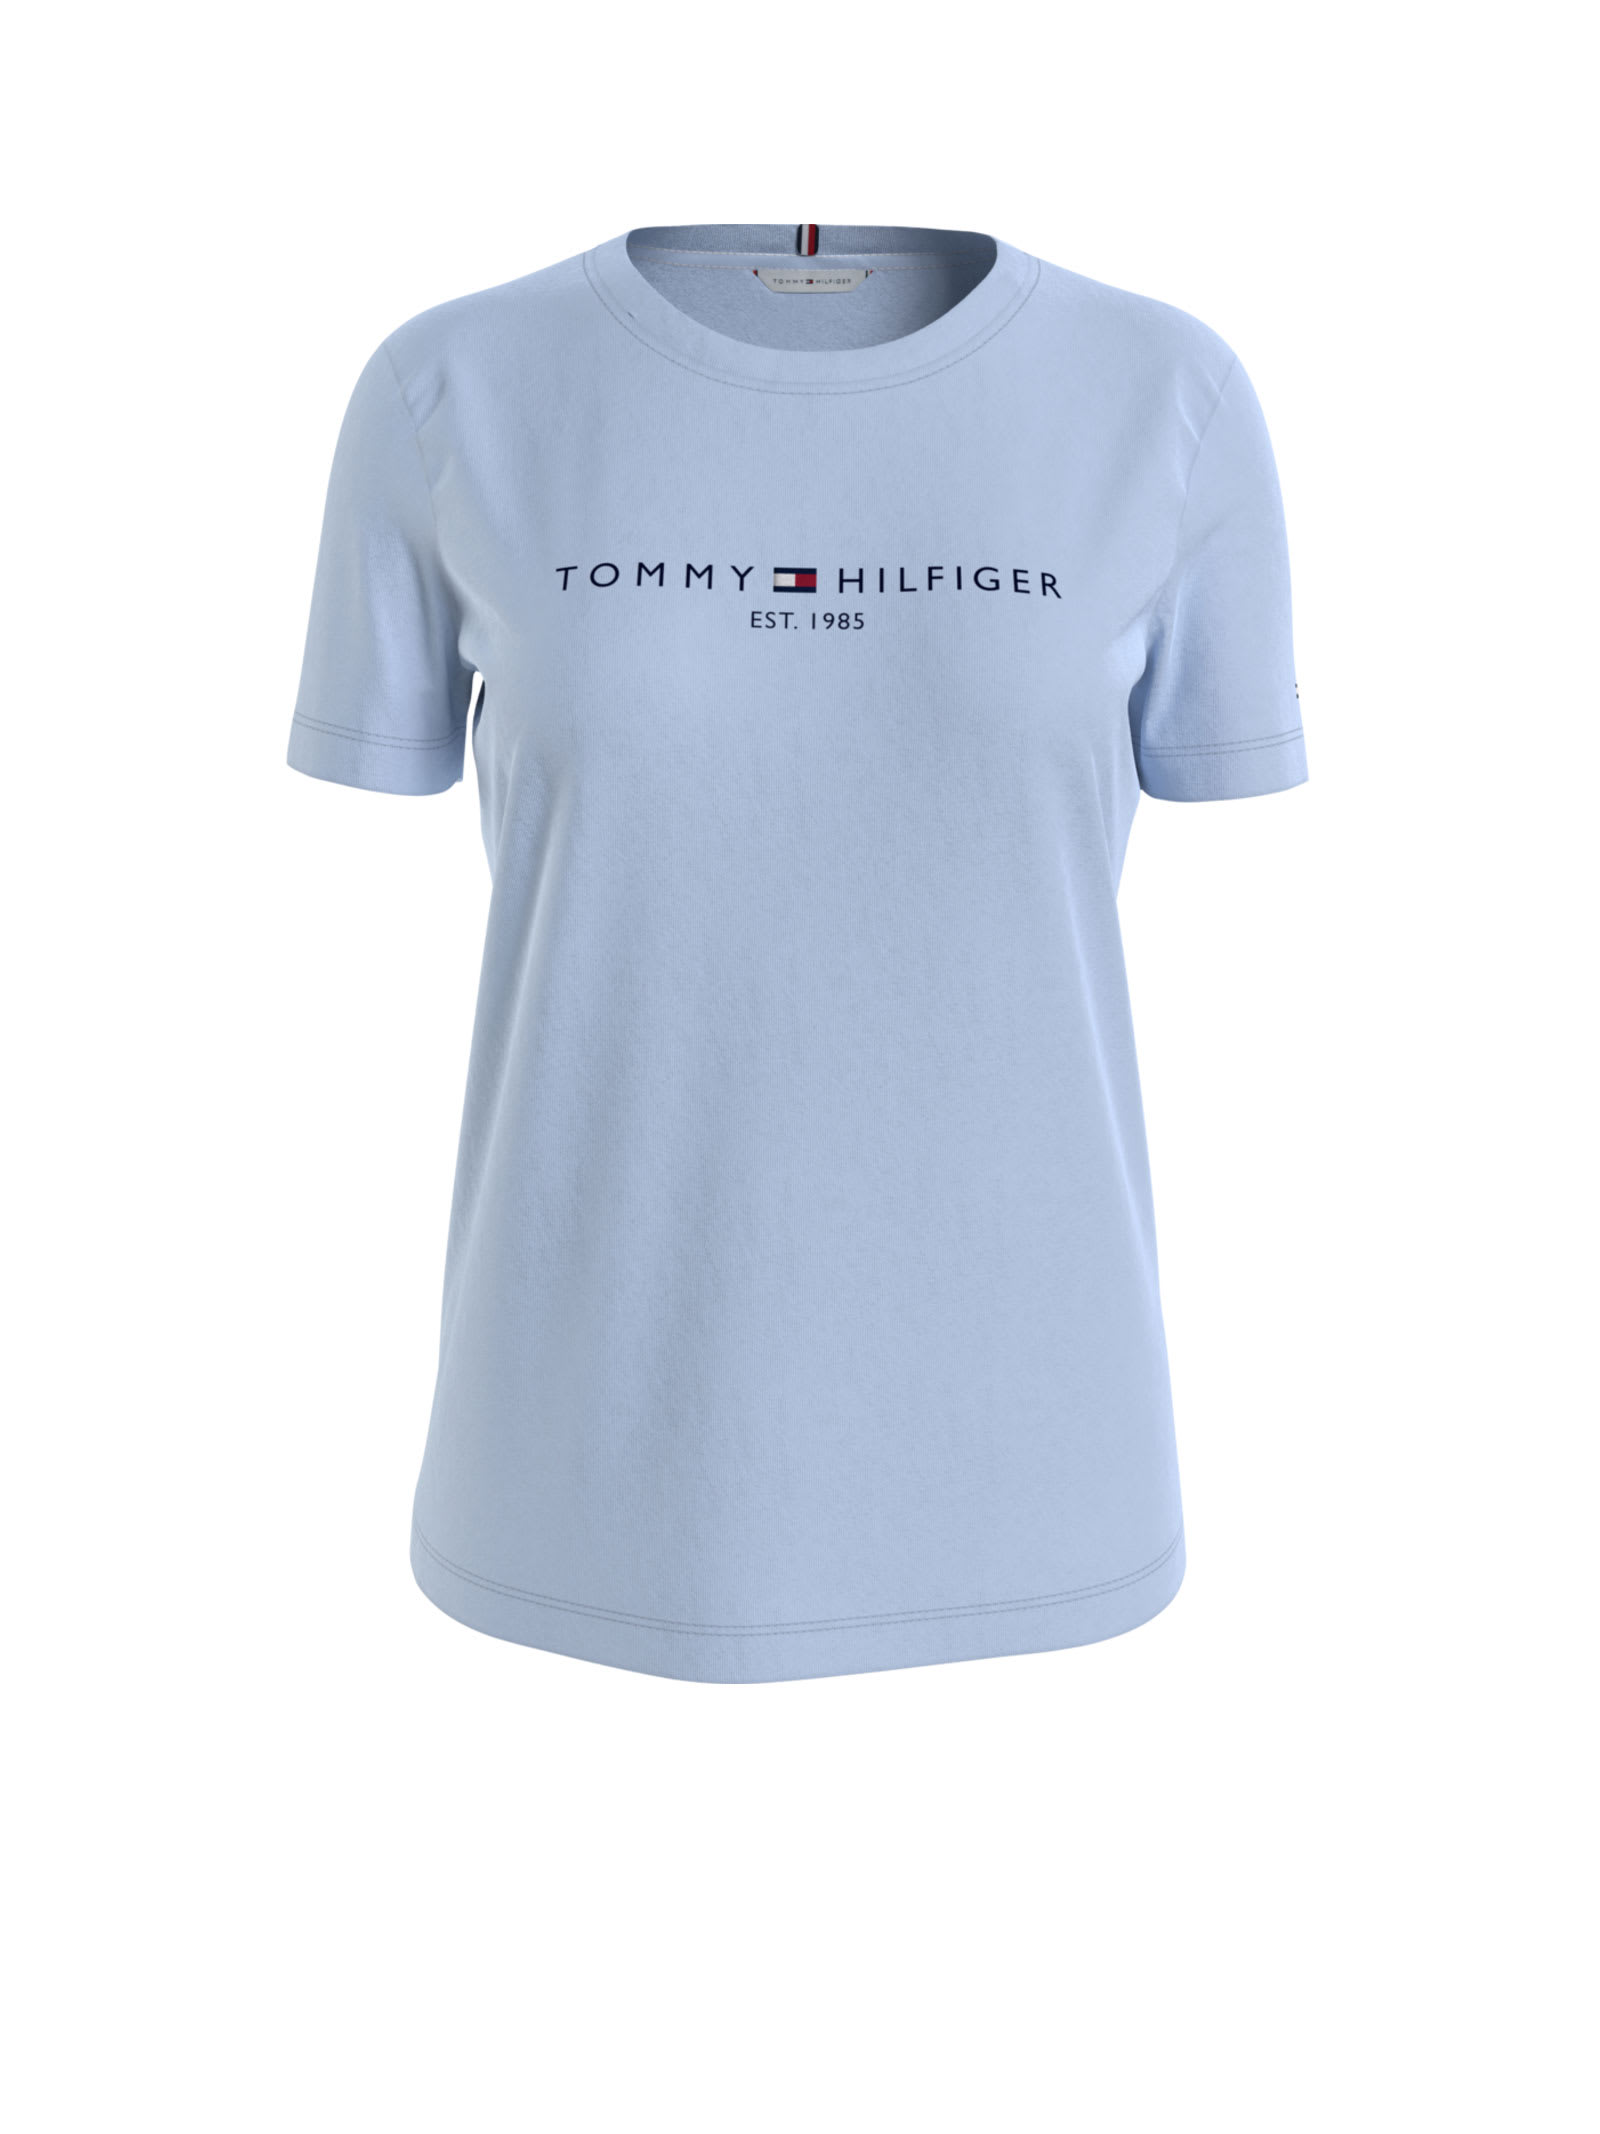 Tommy Hilfiger Light Blue Cotton T-shirt